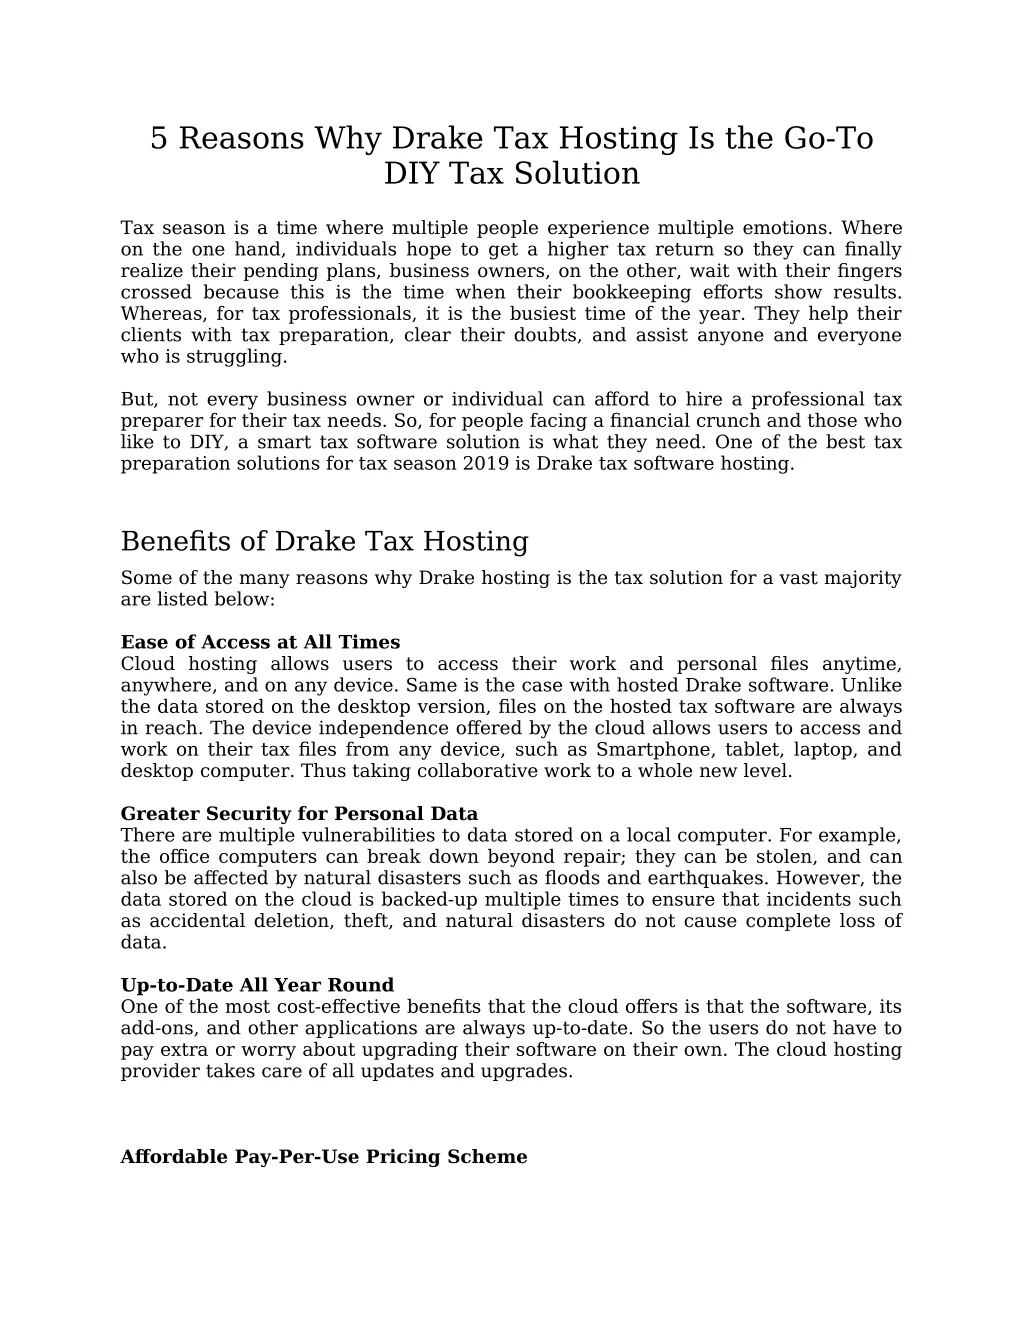 5 reasons why drake tax hosting